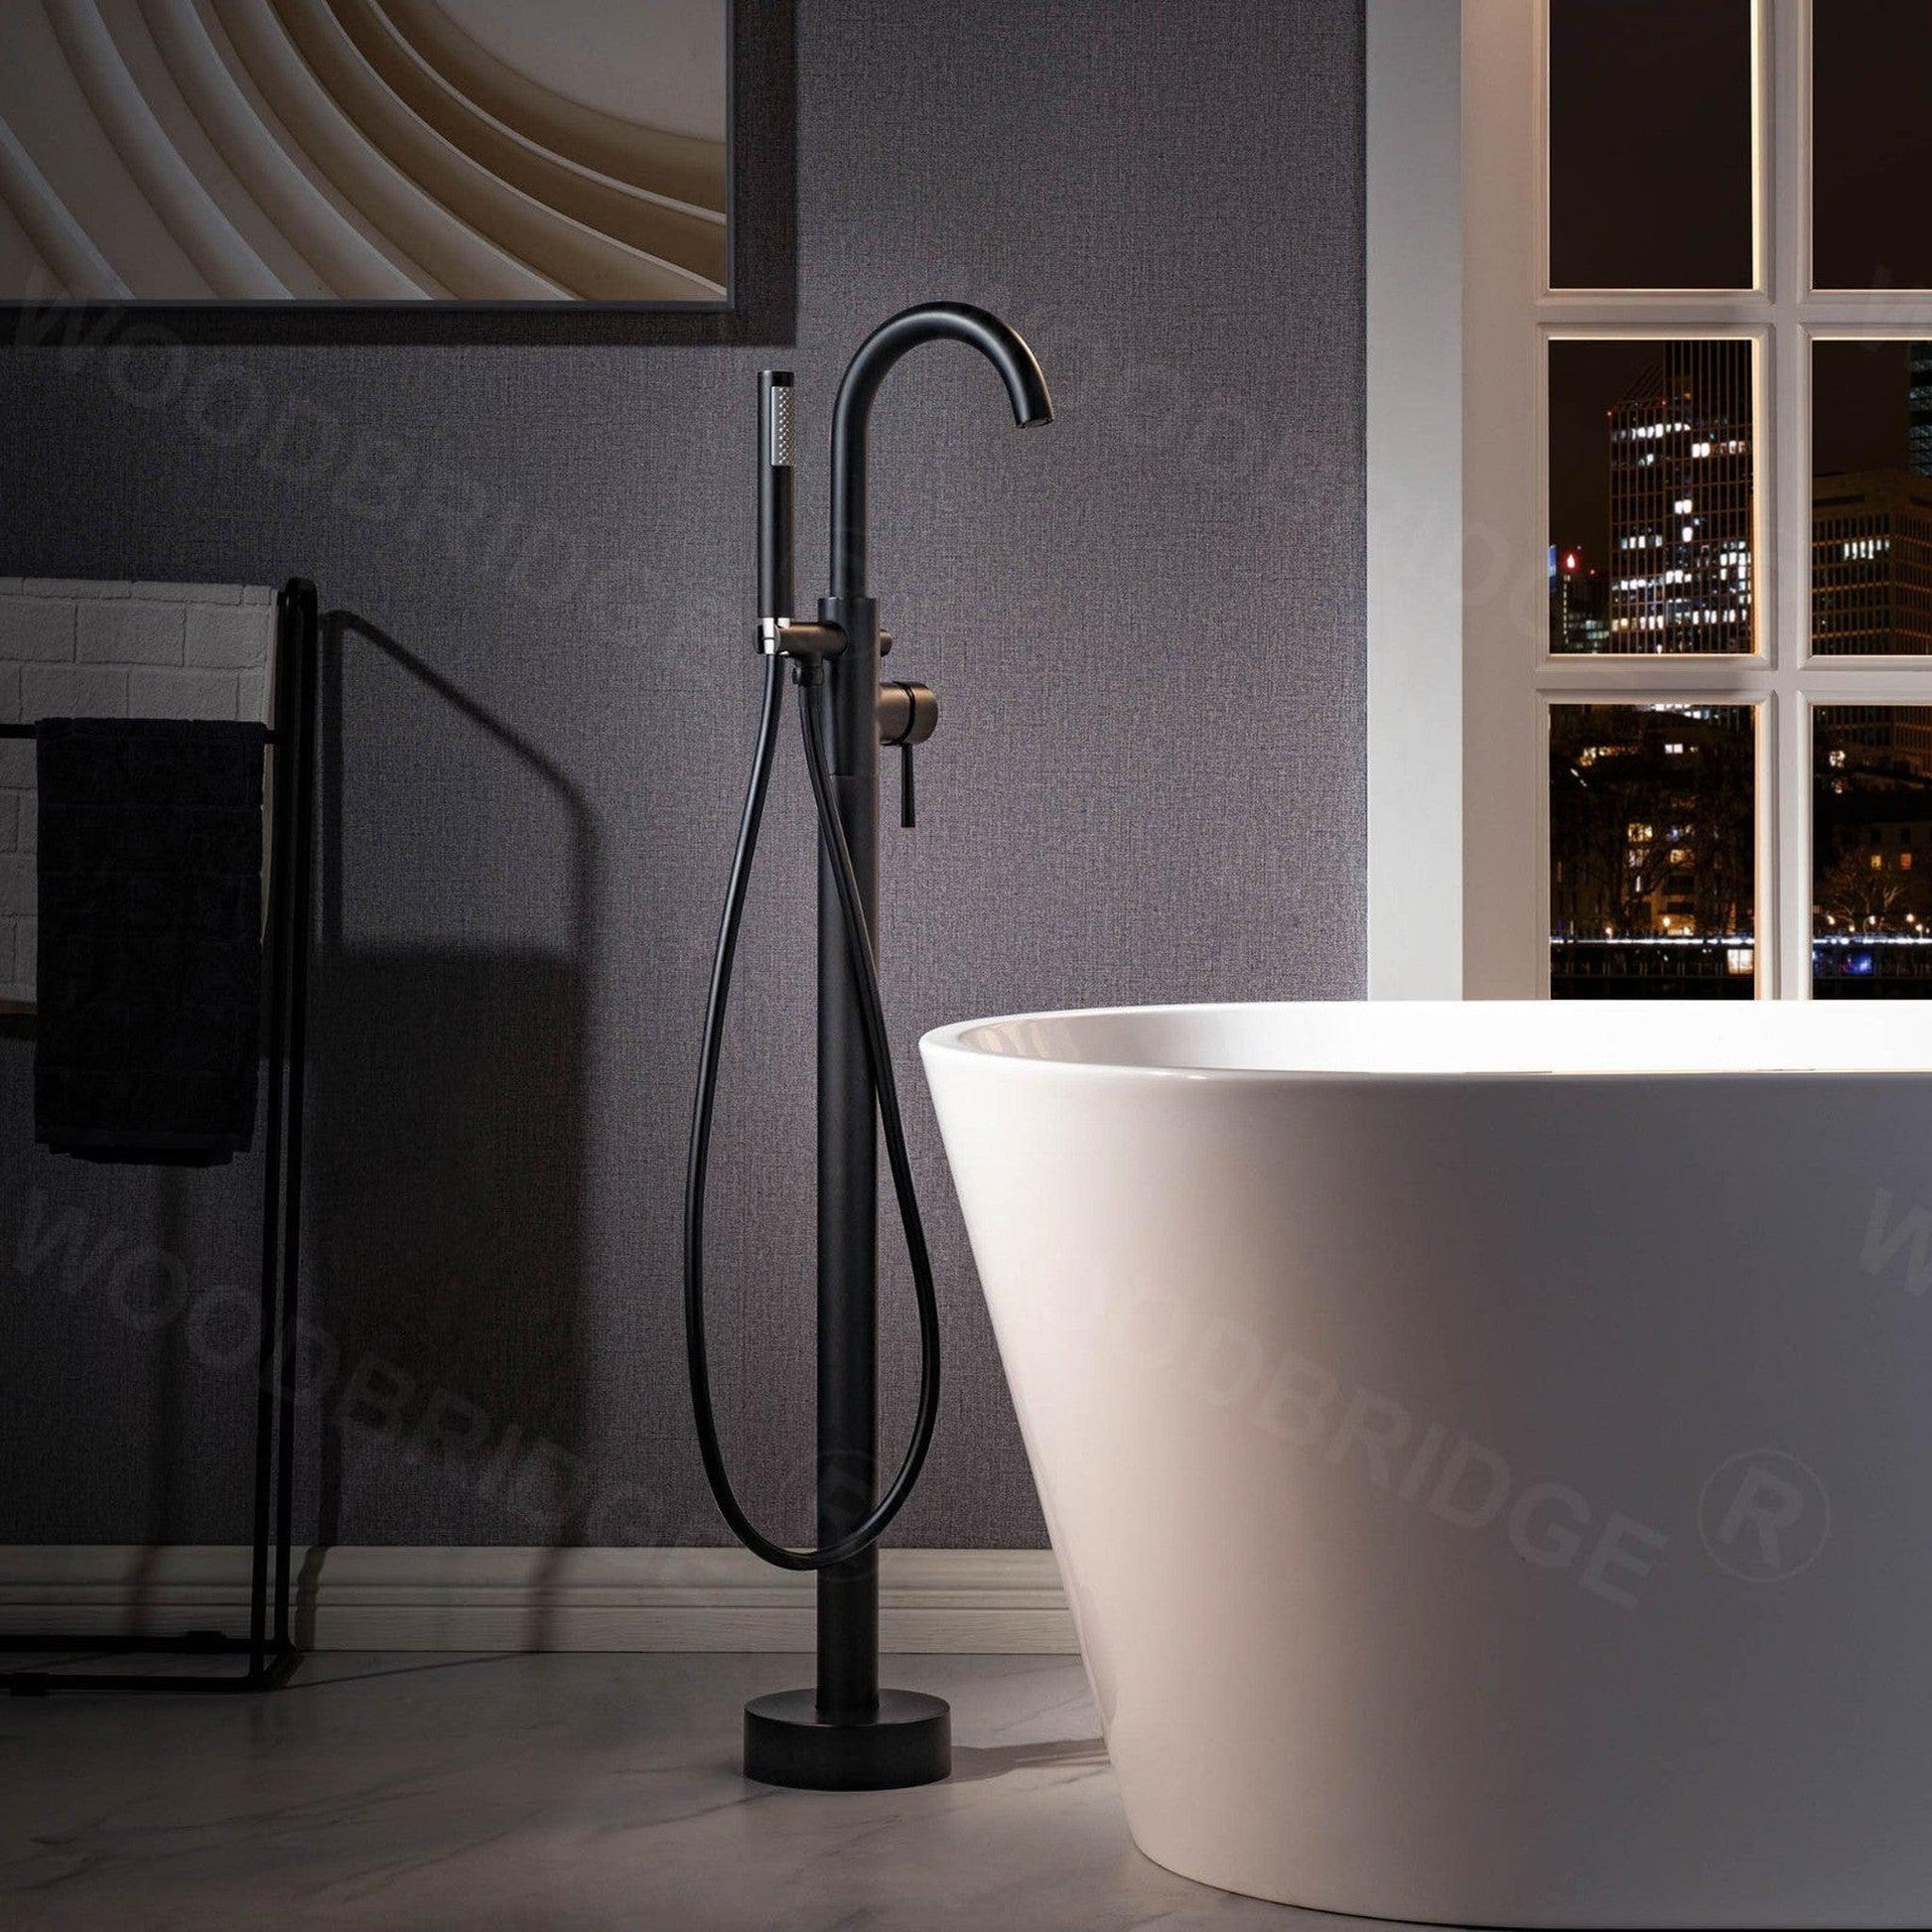 WoodBridge B1702 54" White Acrylic Freestanding Soaking Bathtub With Matte Black Drain, Overflow, F0025MBRD Tub Filler and Caddy Tray